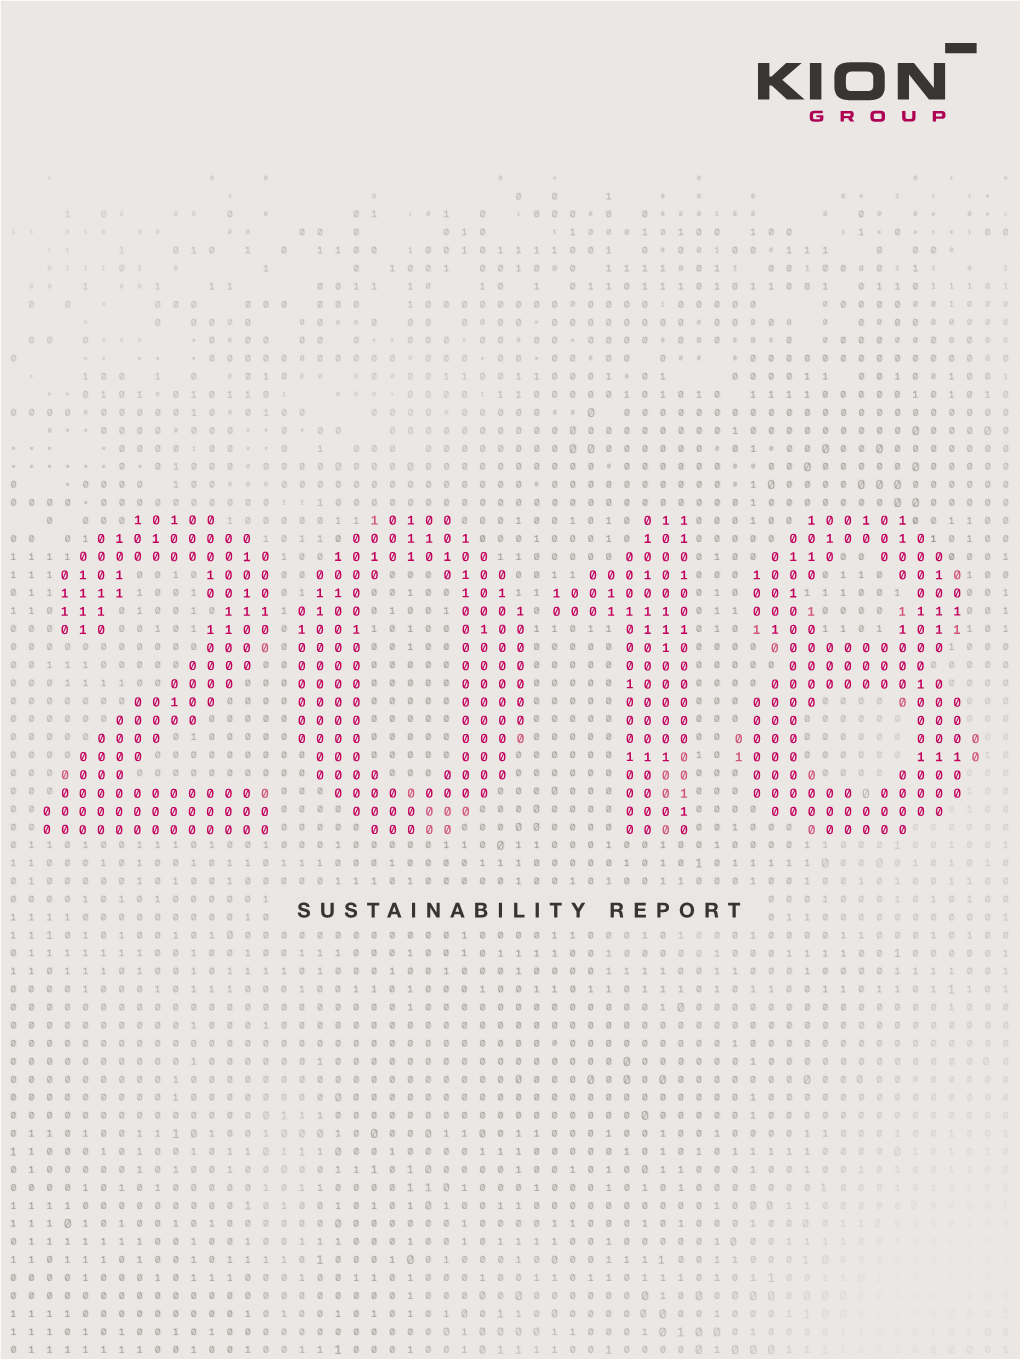 KION Group Sustainability Report 2018